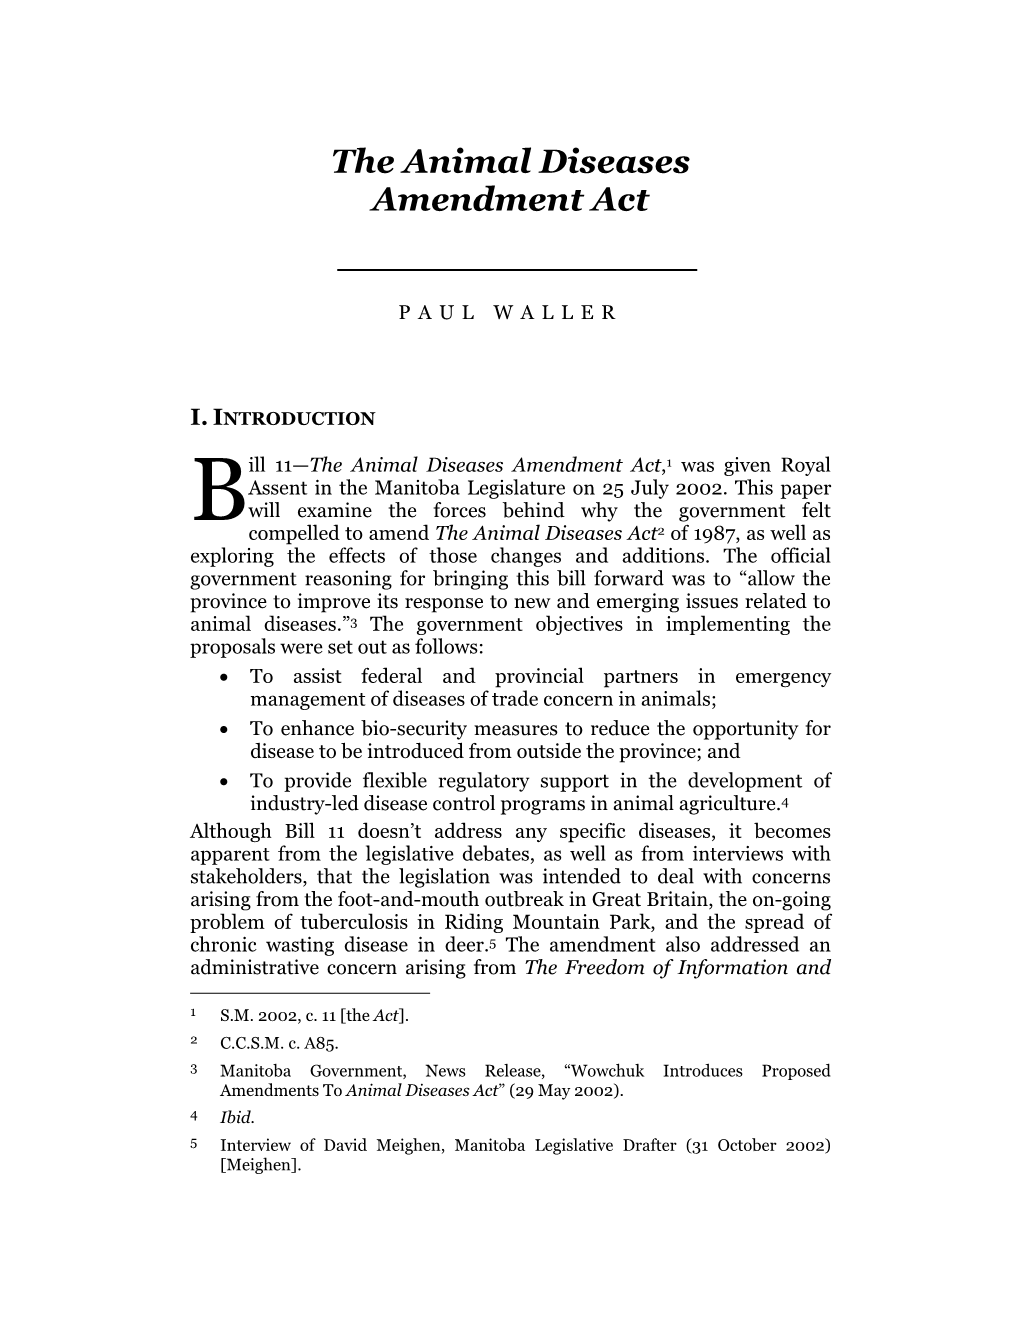 The Animal Diseases Amendment Act